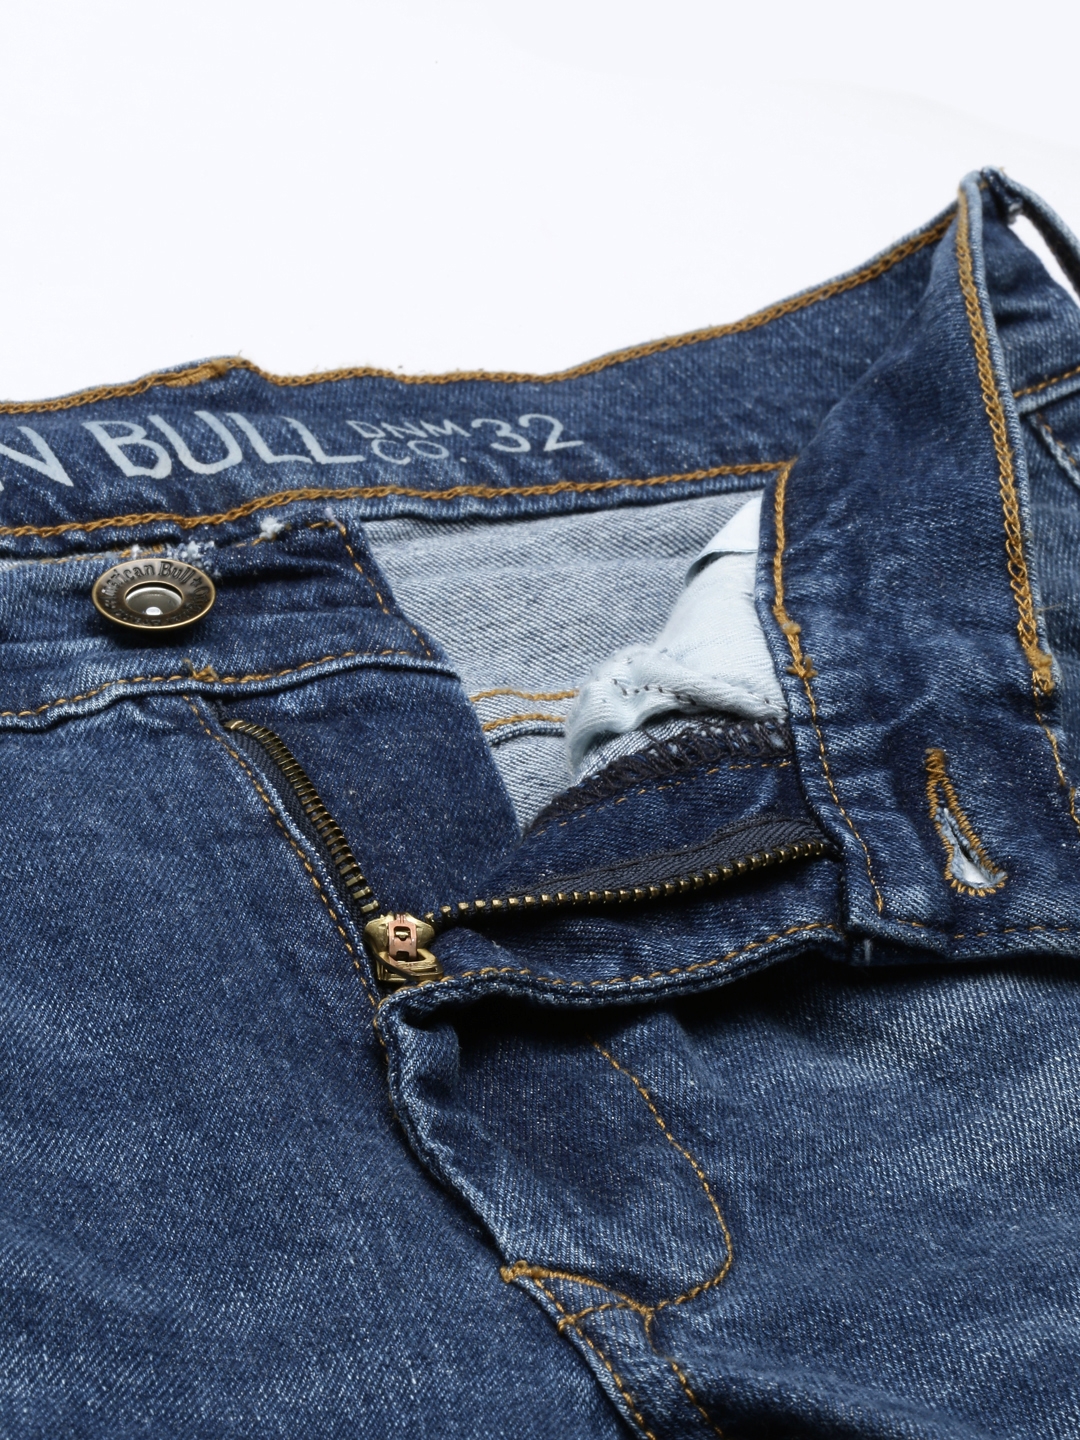 American Bull Mens Blue Denim Jeans